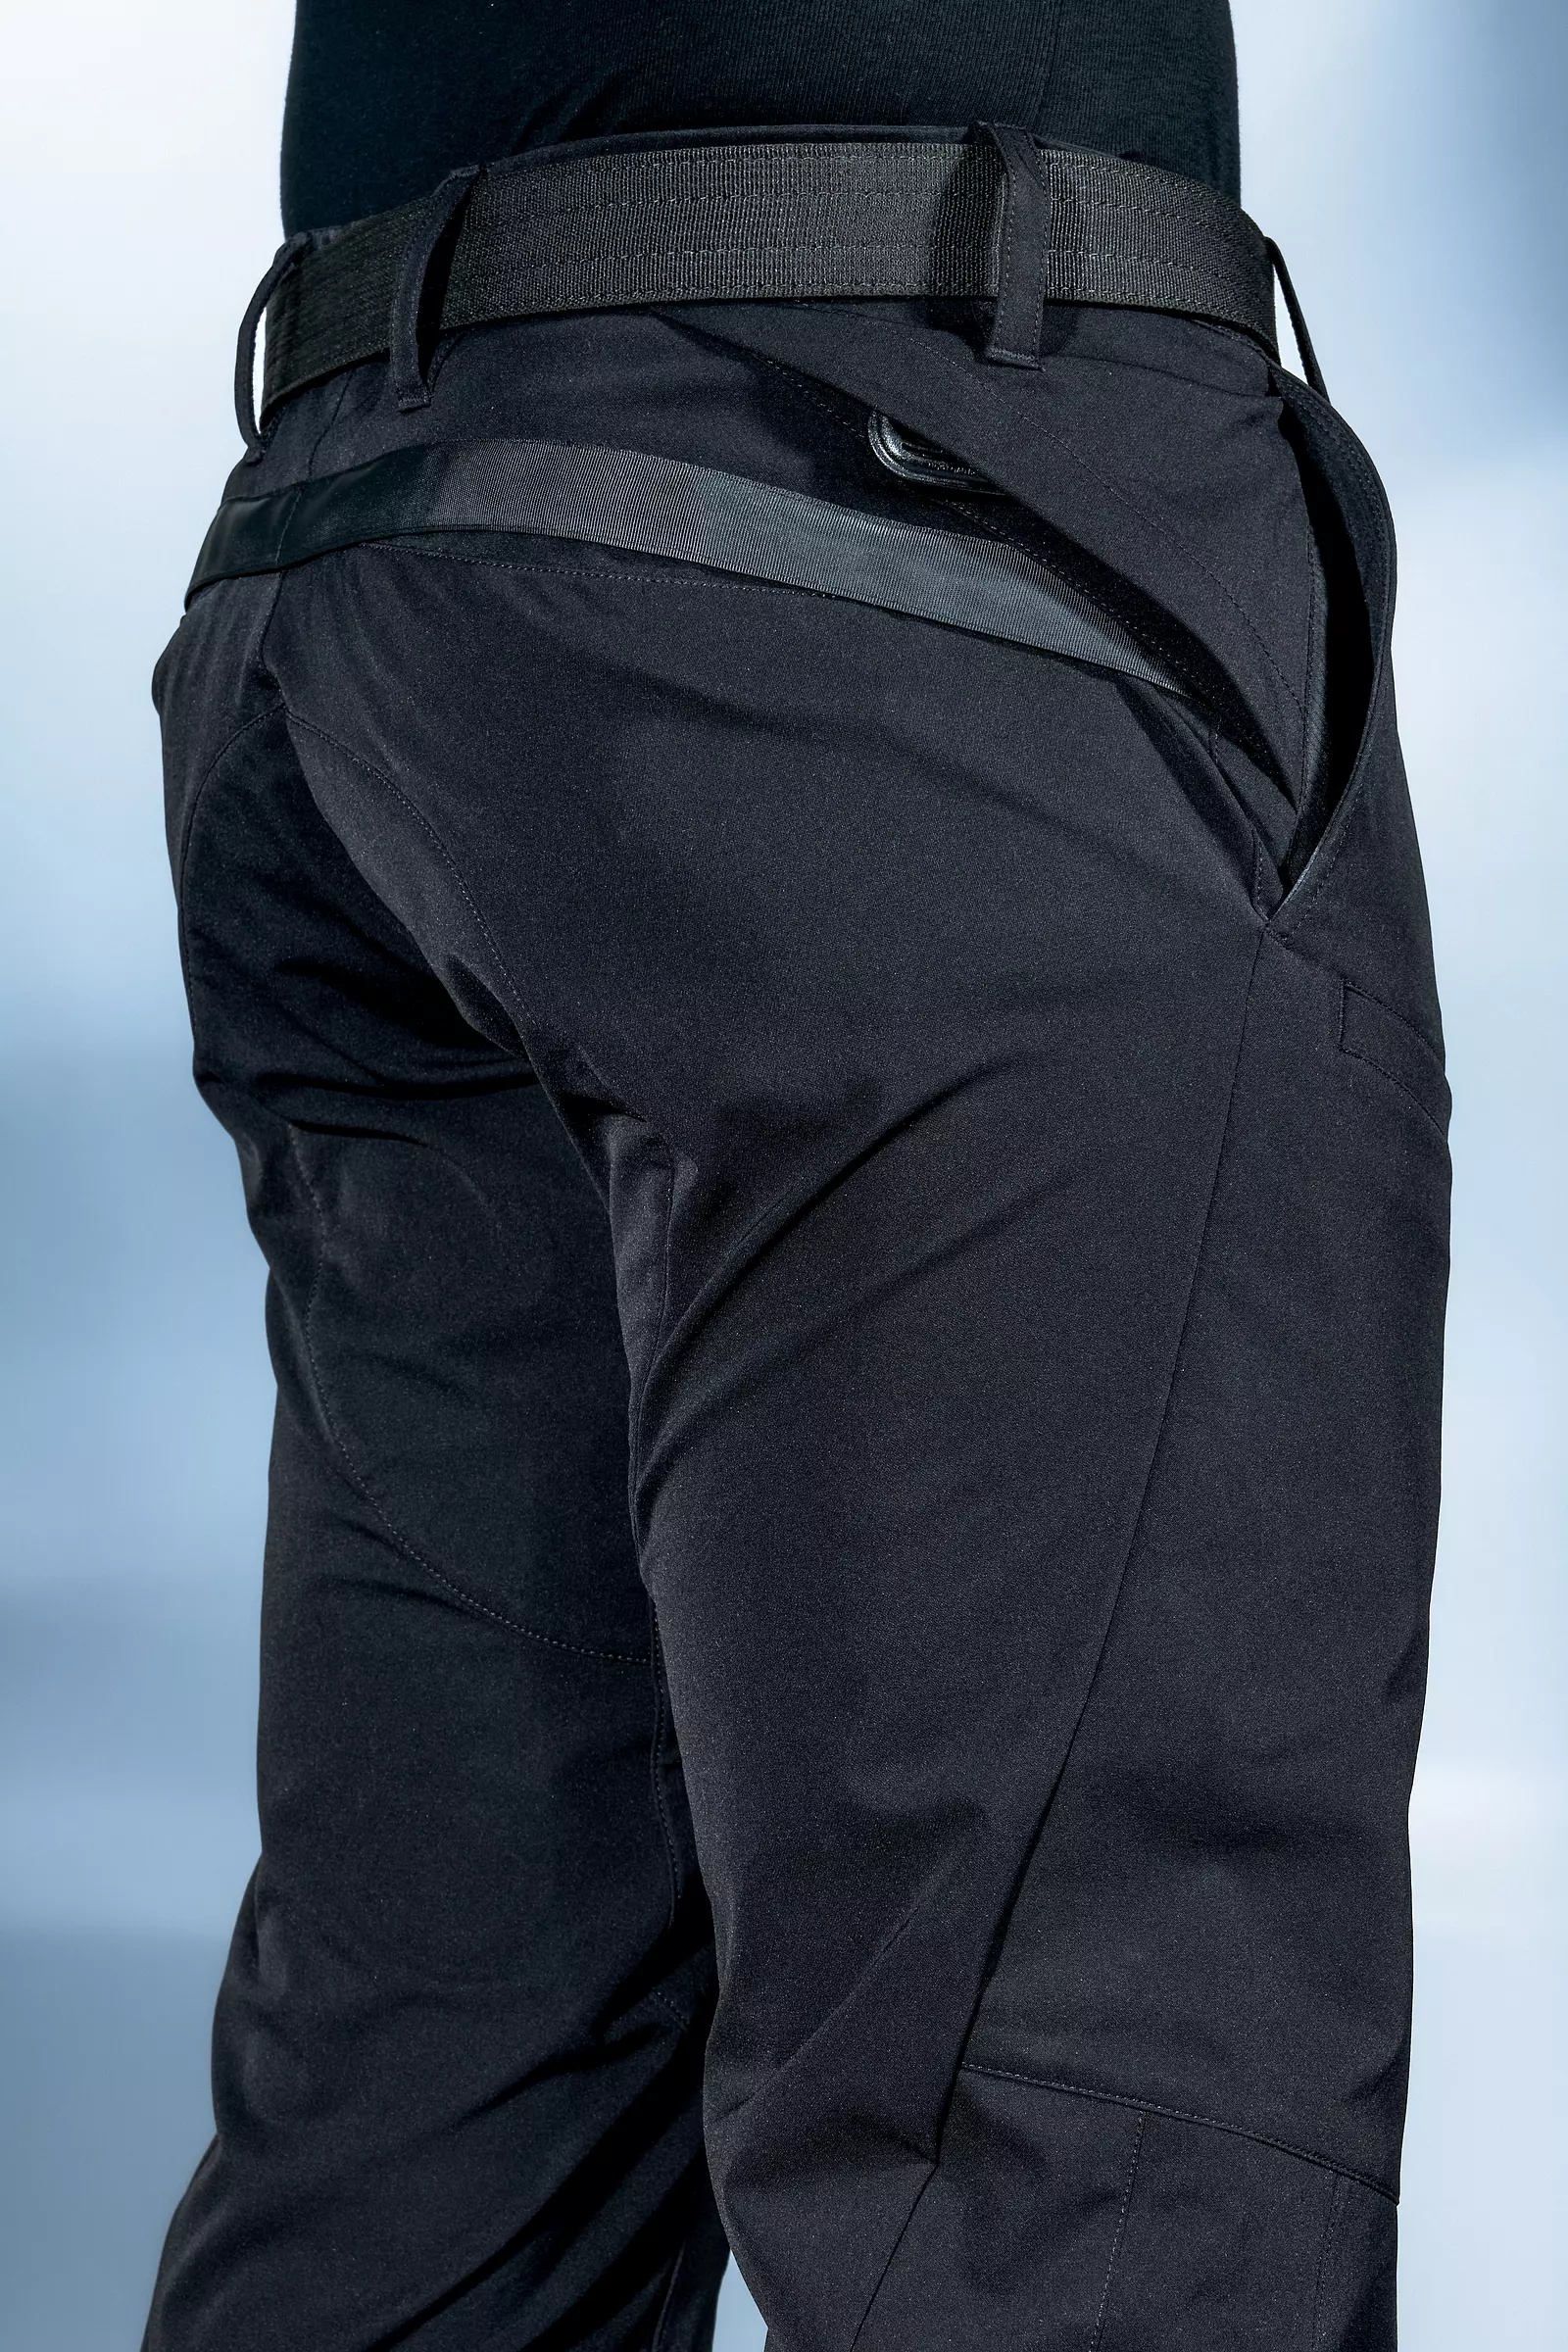 P10-DS schoeller® Dryskin™ Articulated Pant Black - 22